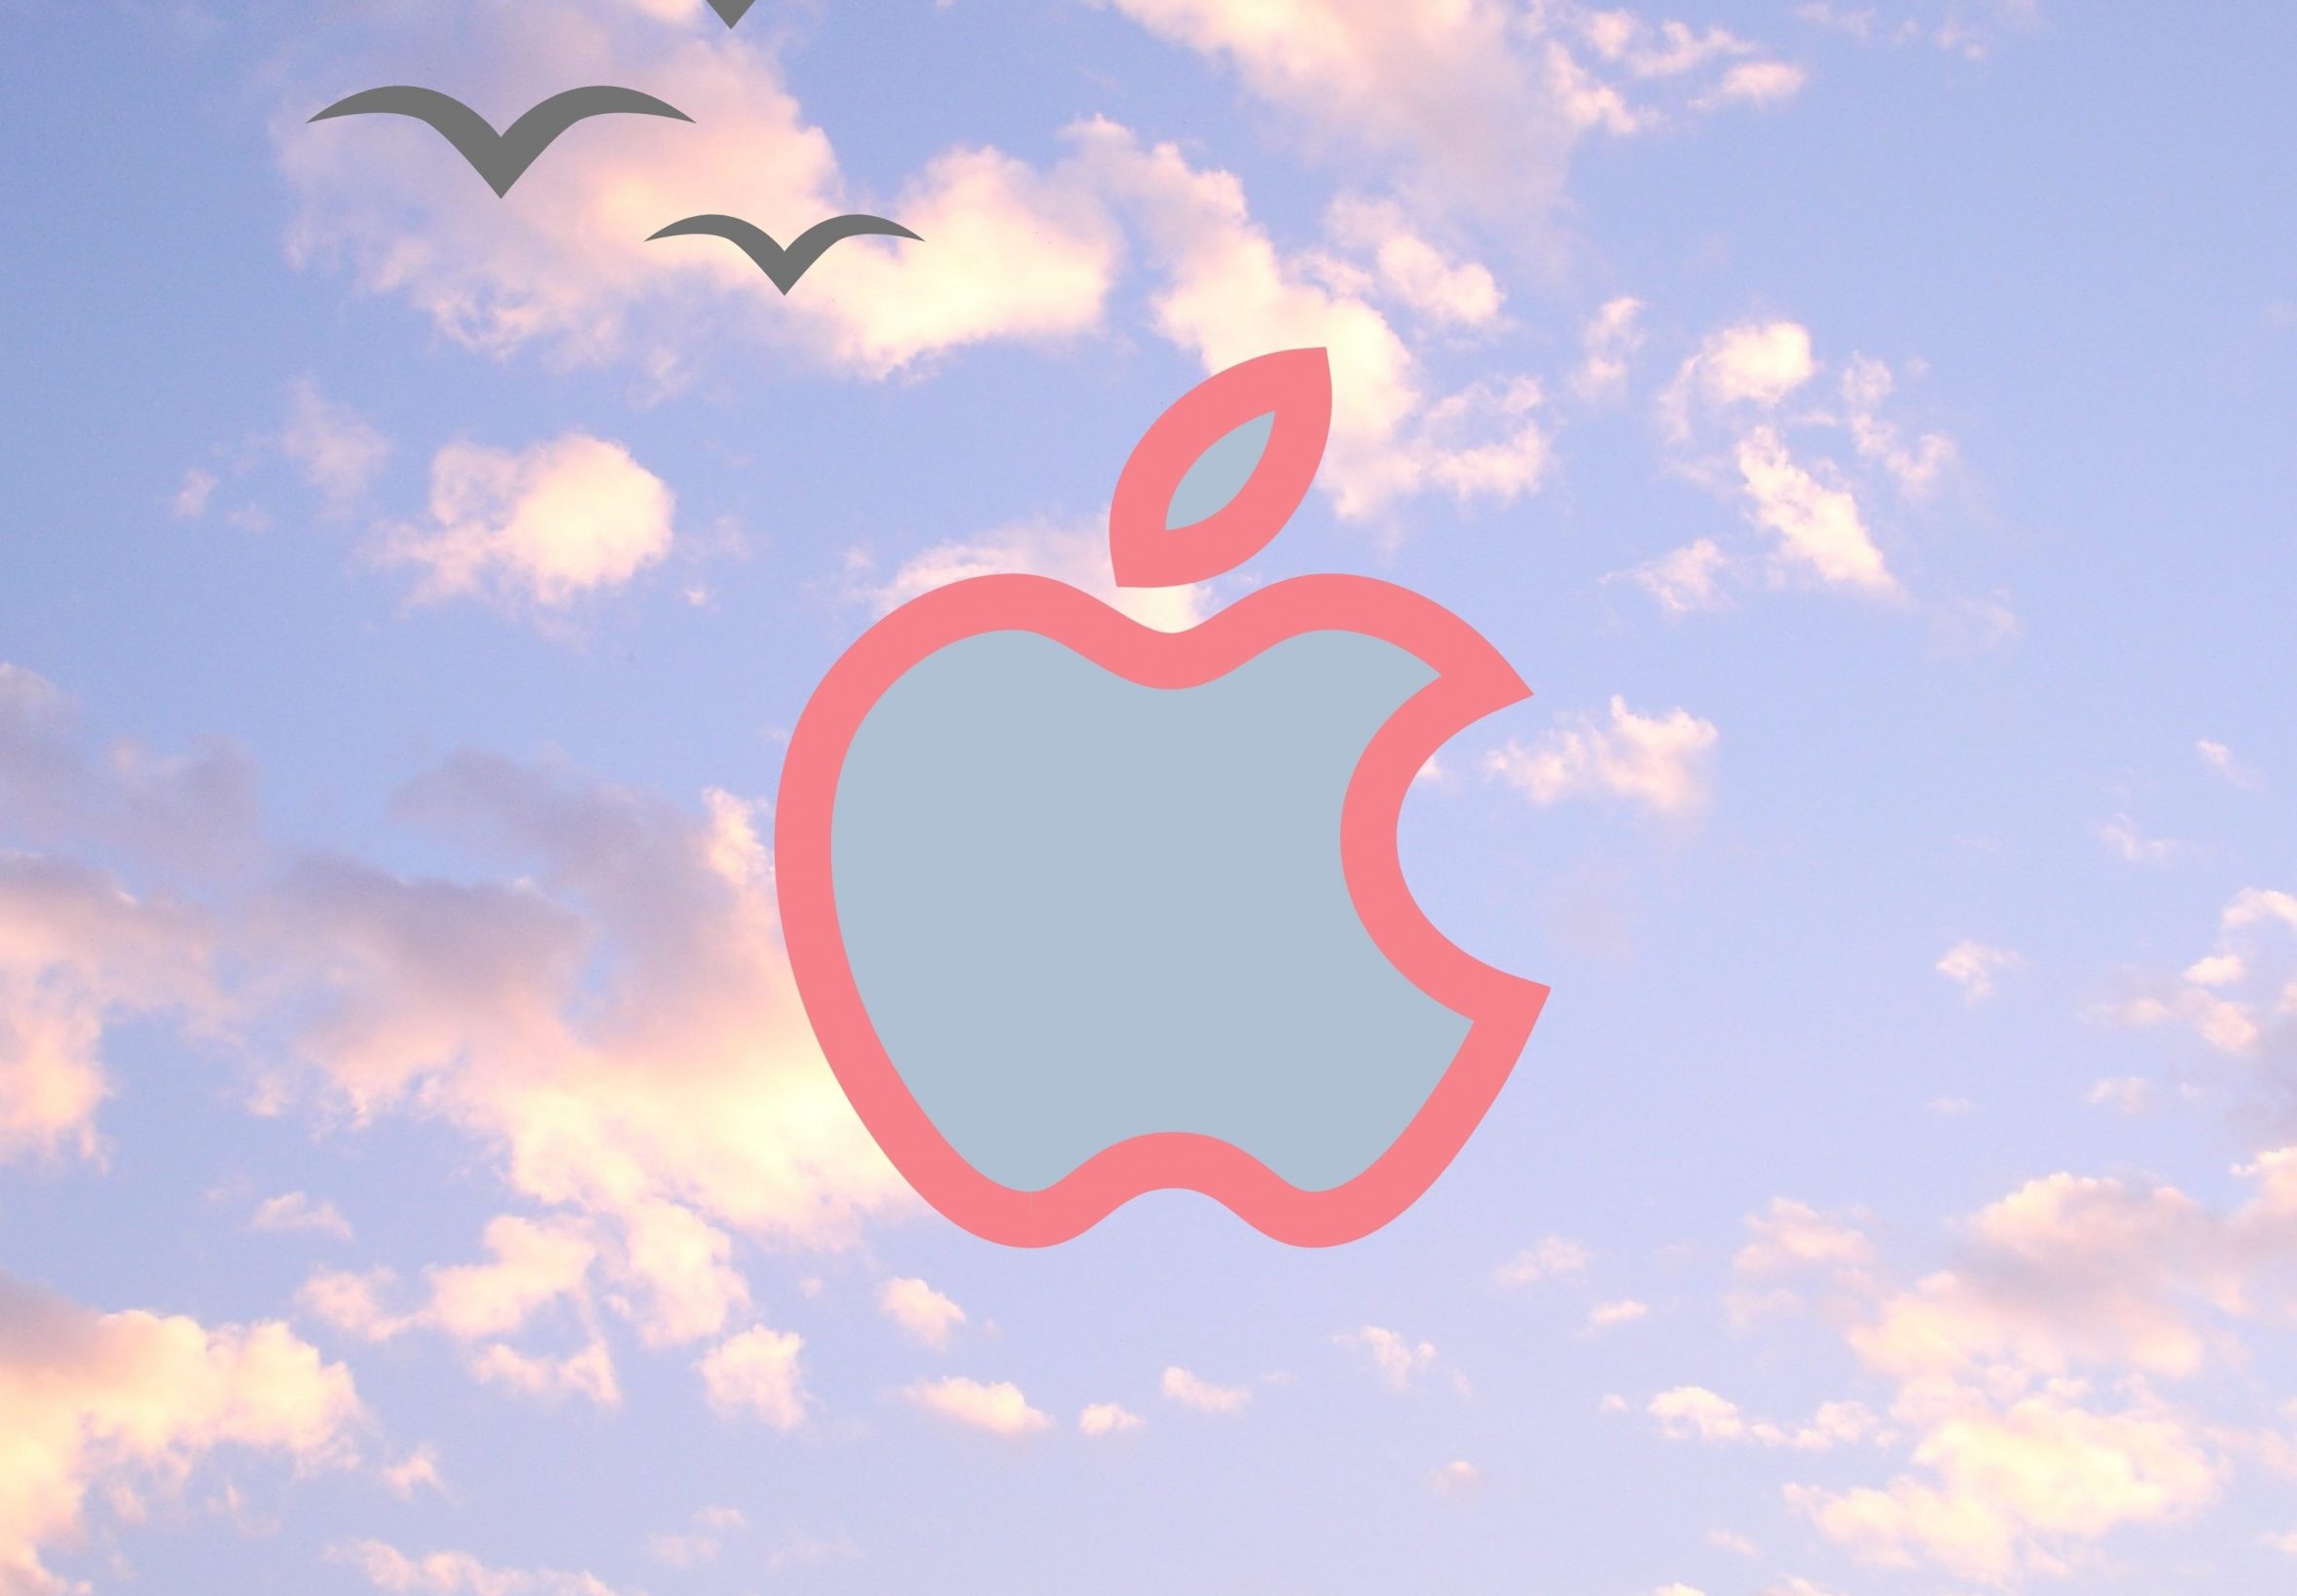 2360x1640 iPad Air wallpaper 4k Apple Logo Pink Blue Sky Clouds Birds iPad Wallpaper 2360x1640 pixels resolution